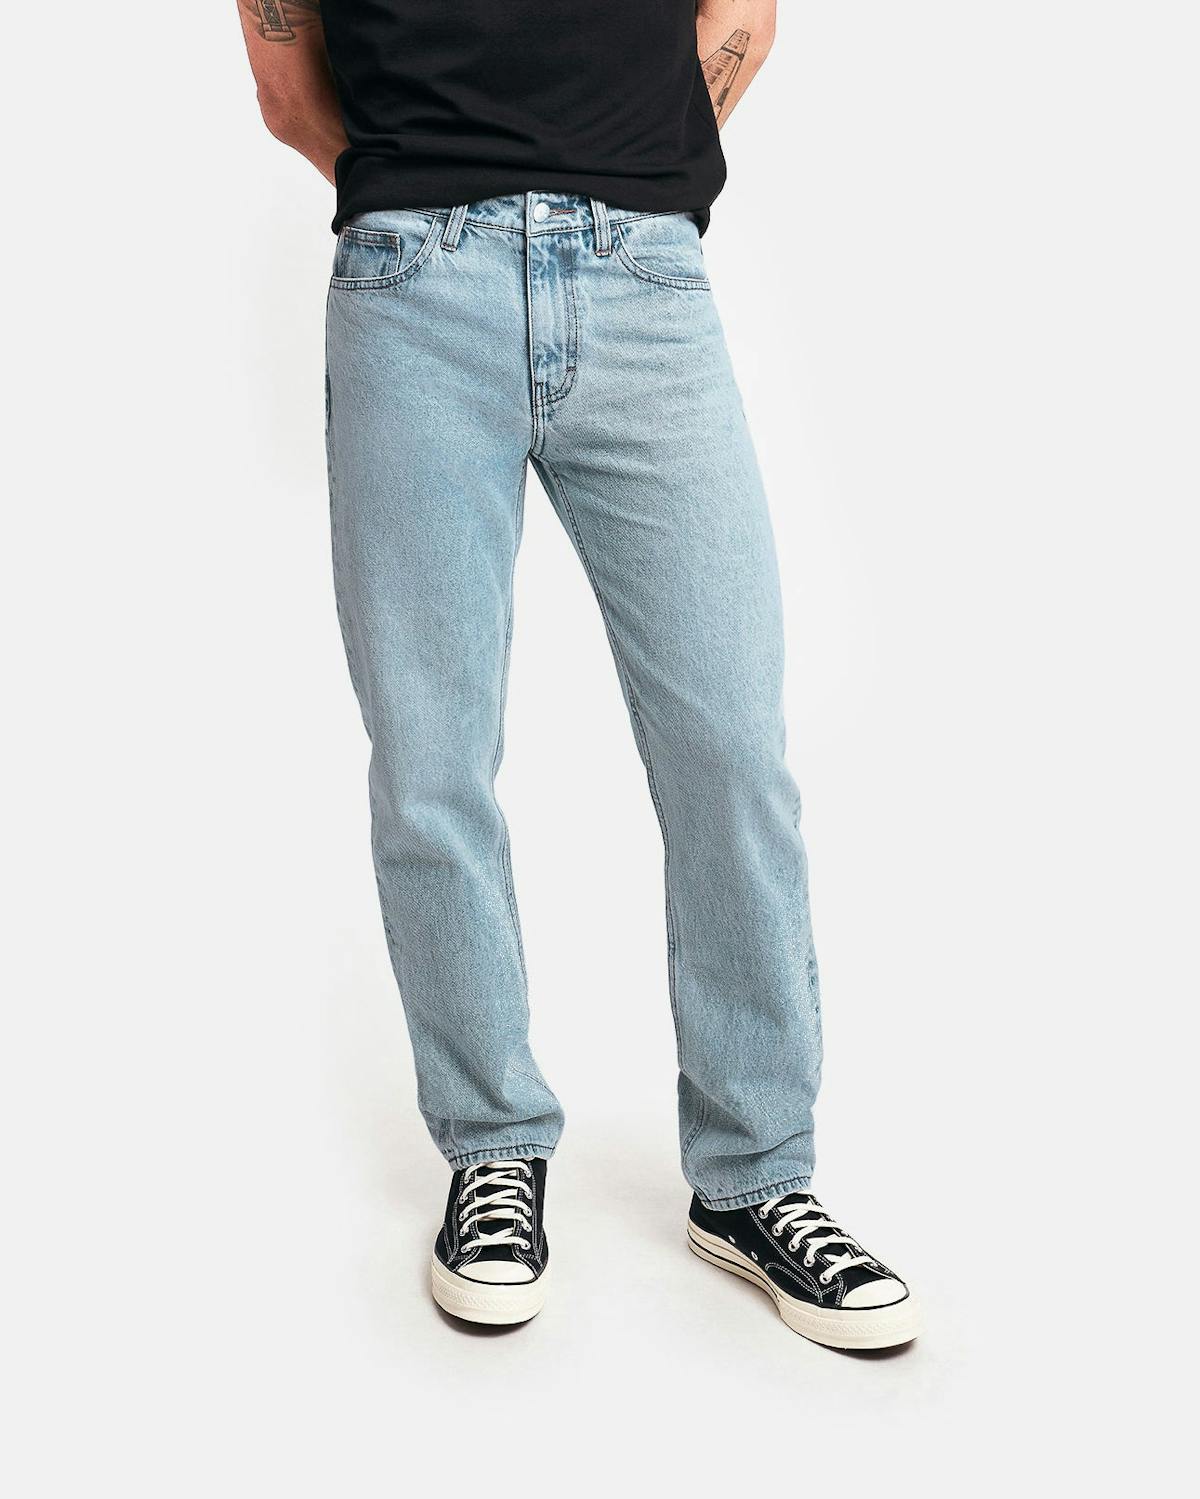 straight fit jeans in organic light vintage - unspun custom denim